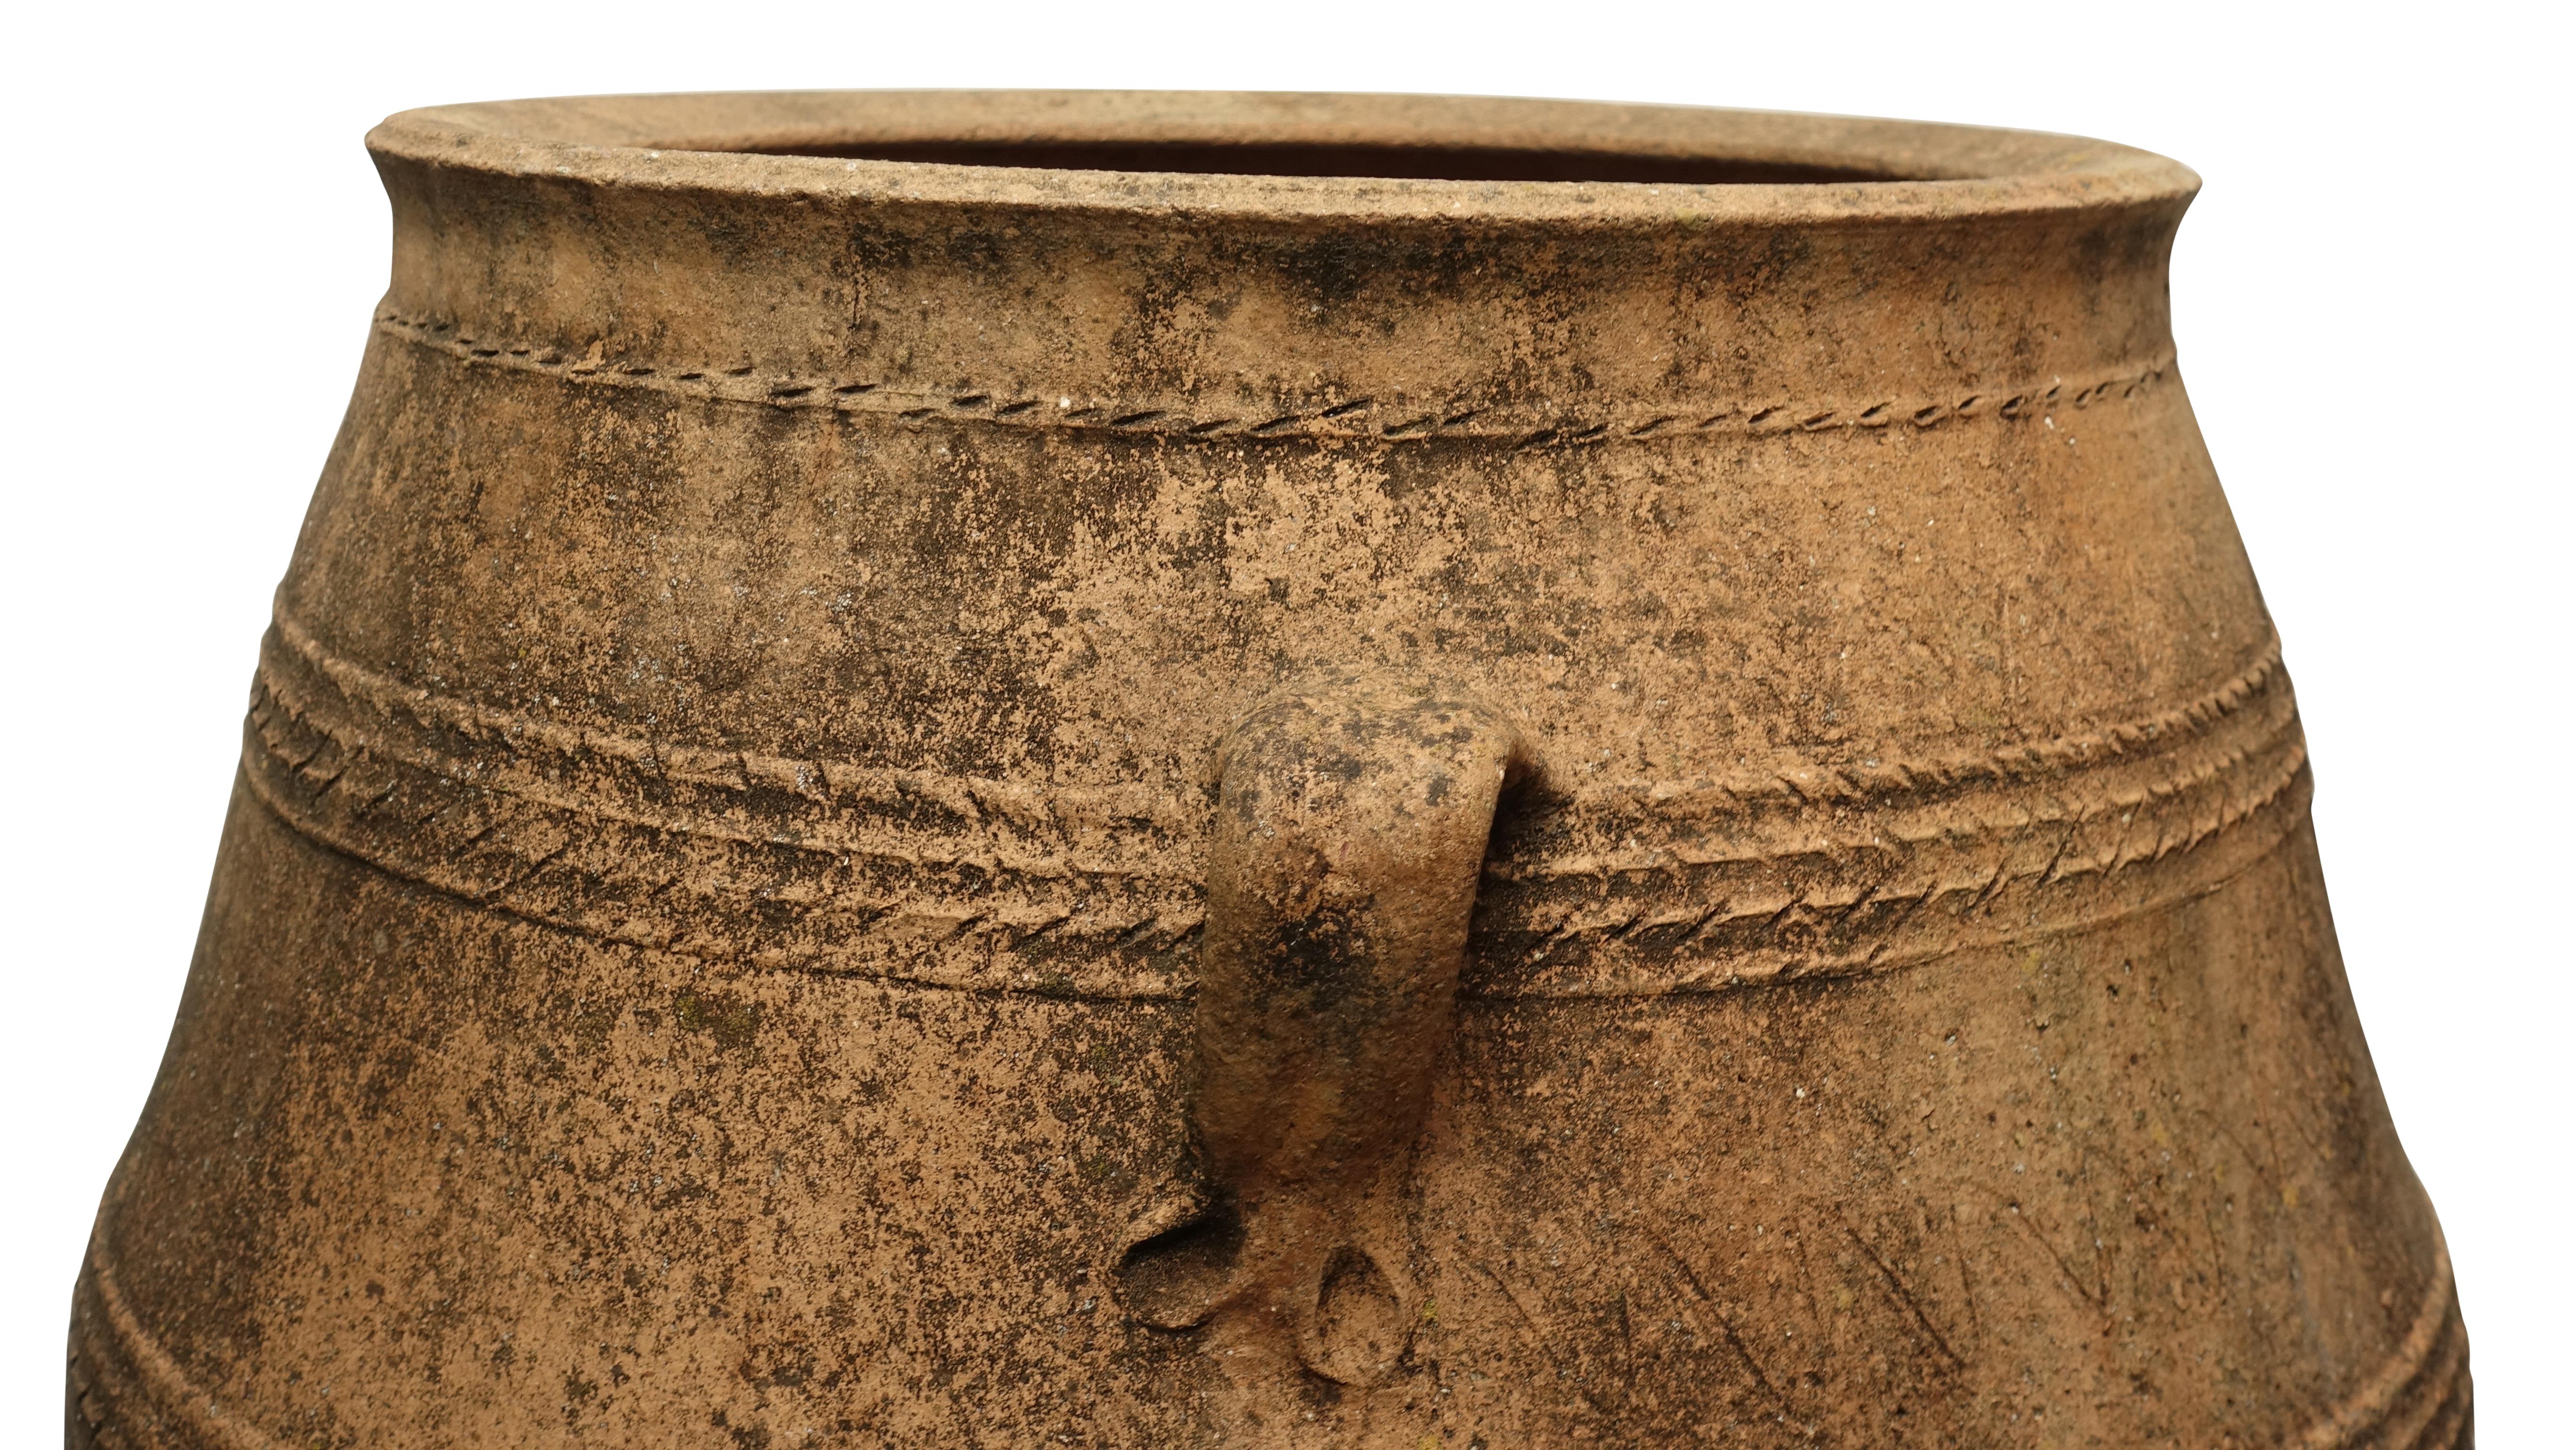 Hand-Crafted Large Terra Cotta Oil Jar, Italian, 19th Century